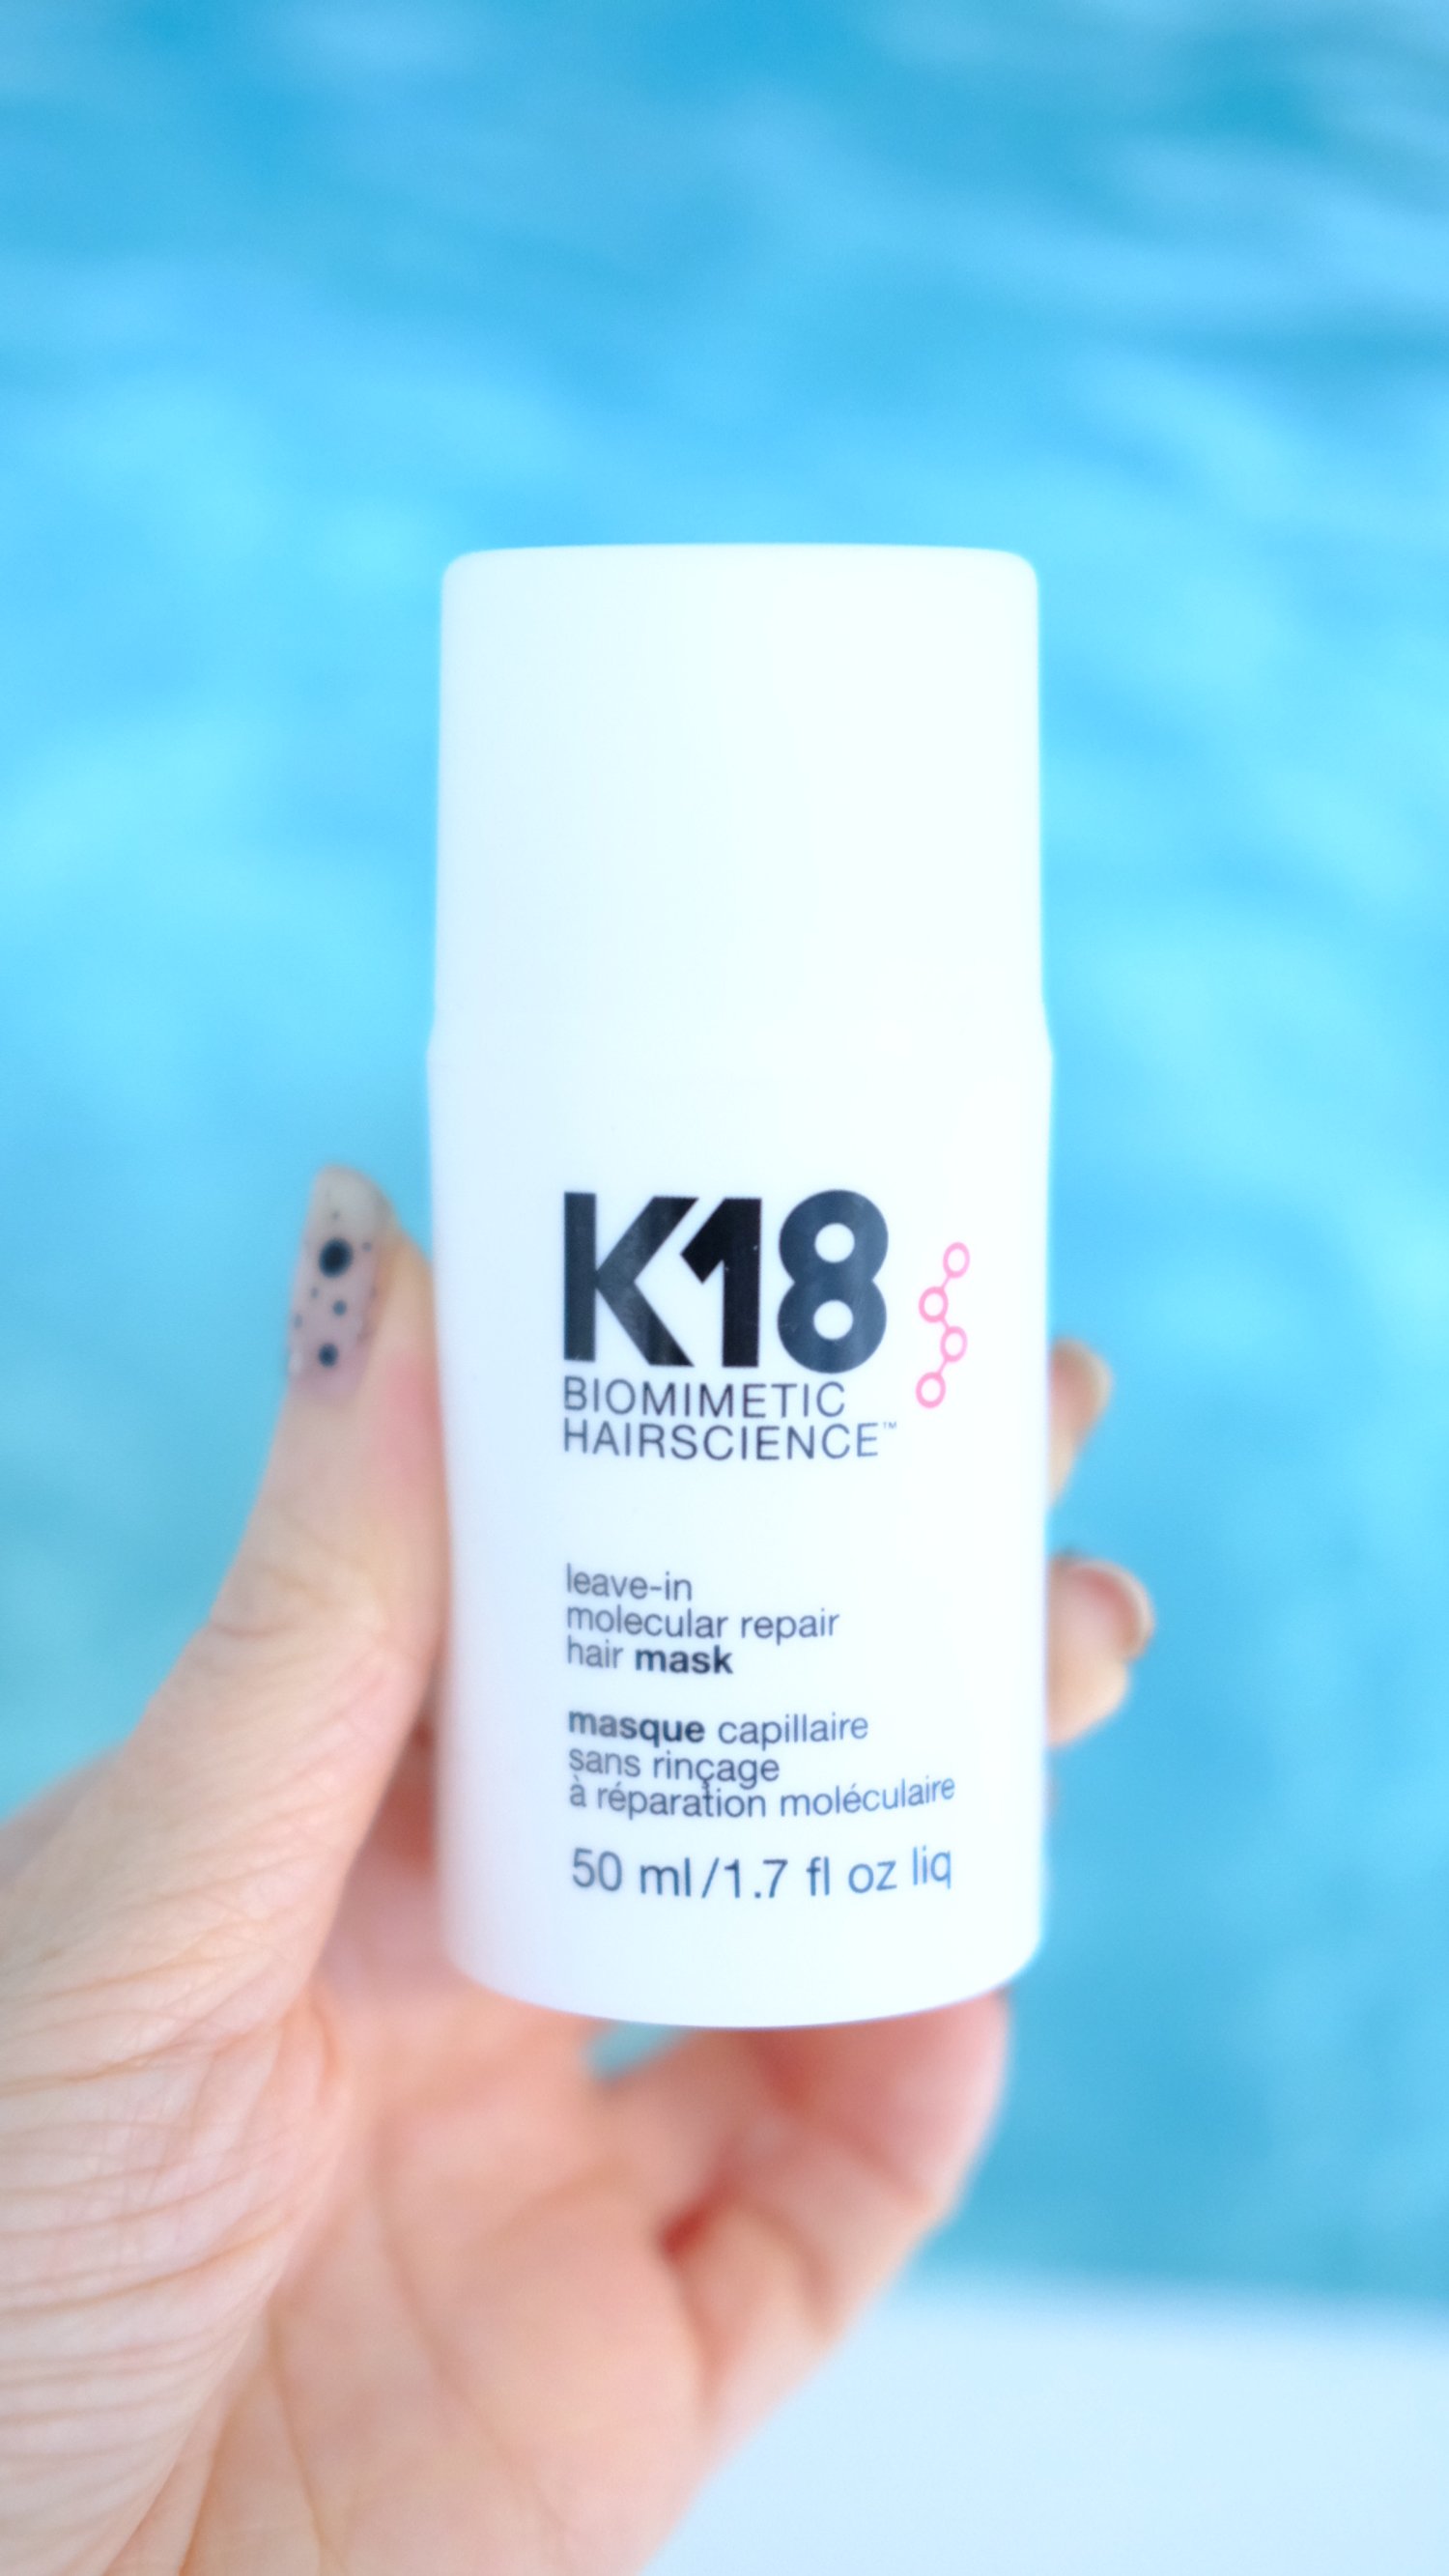 K18 reviews. K18 how to use. K18 hair mask reviews.